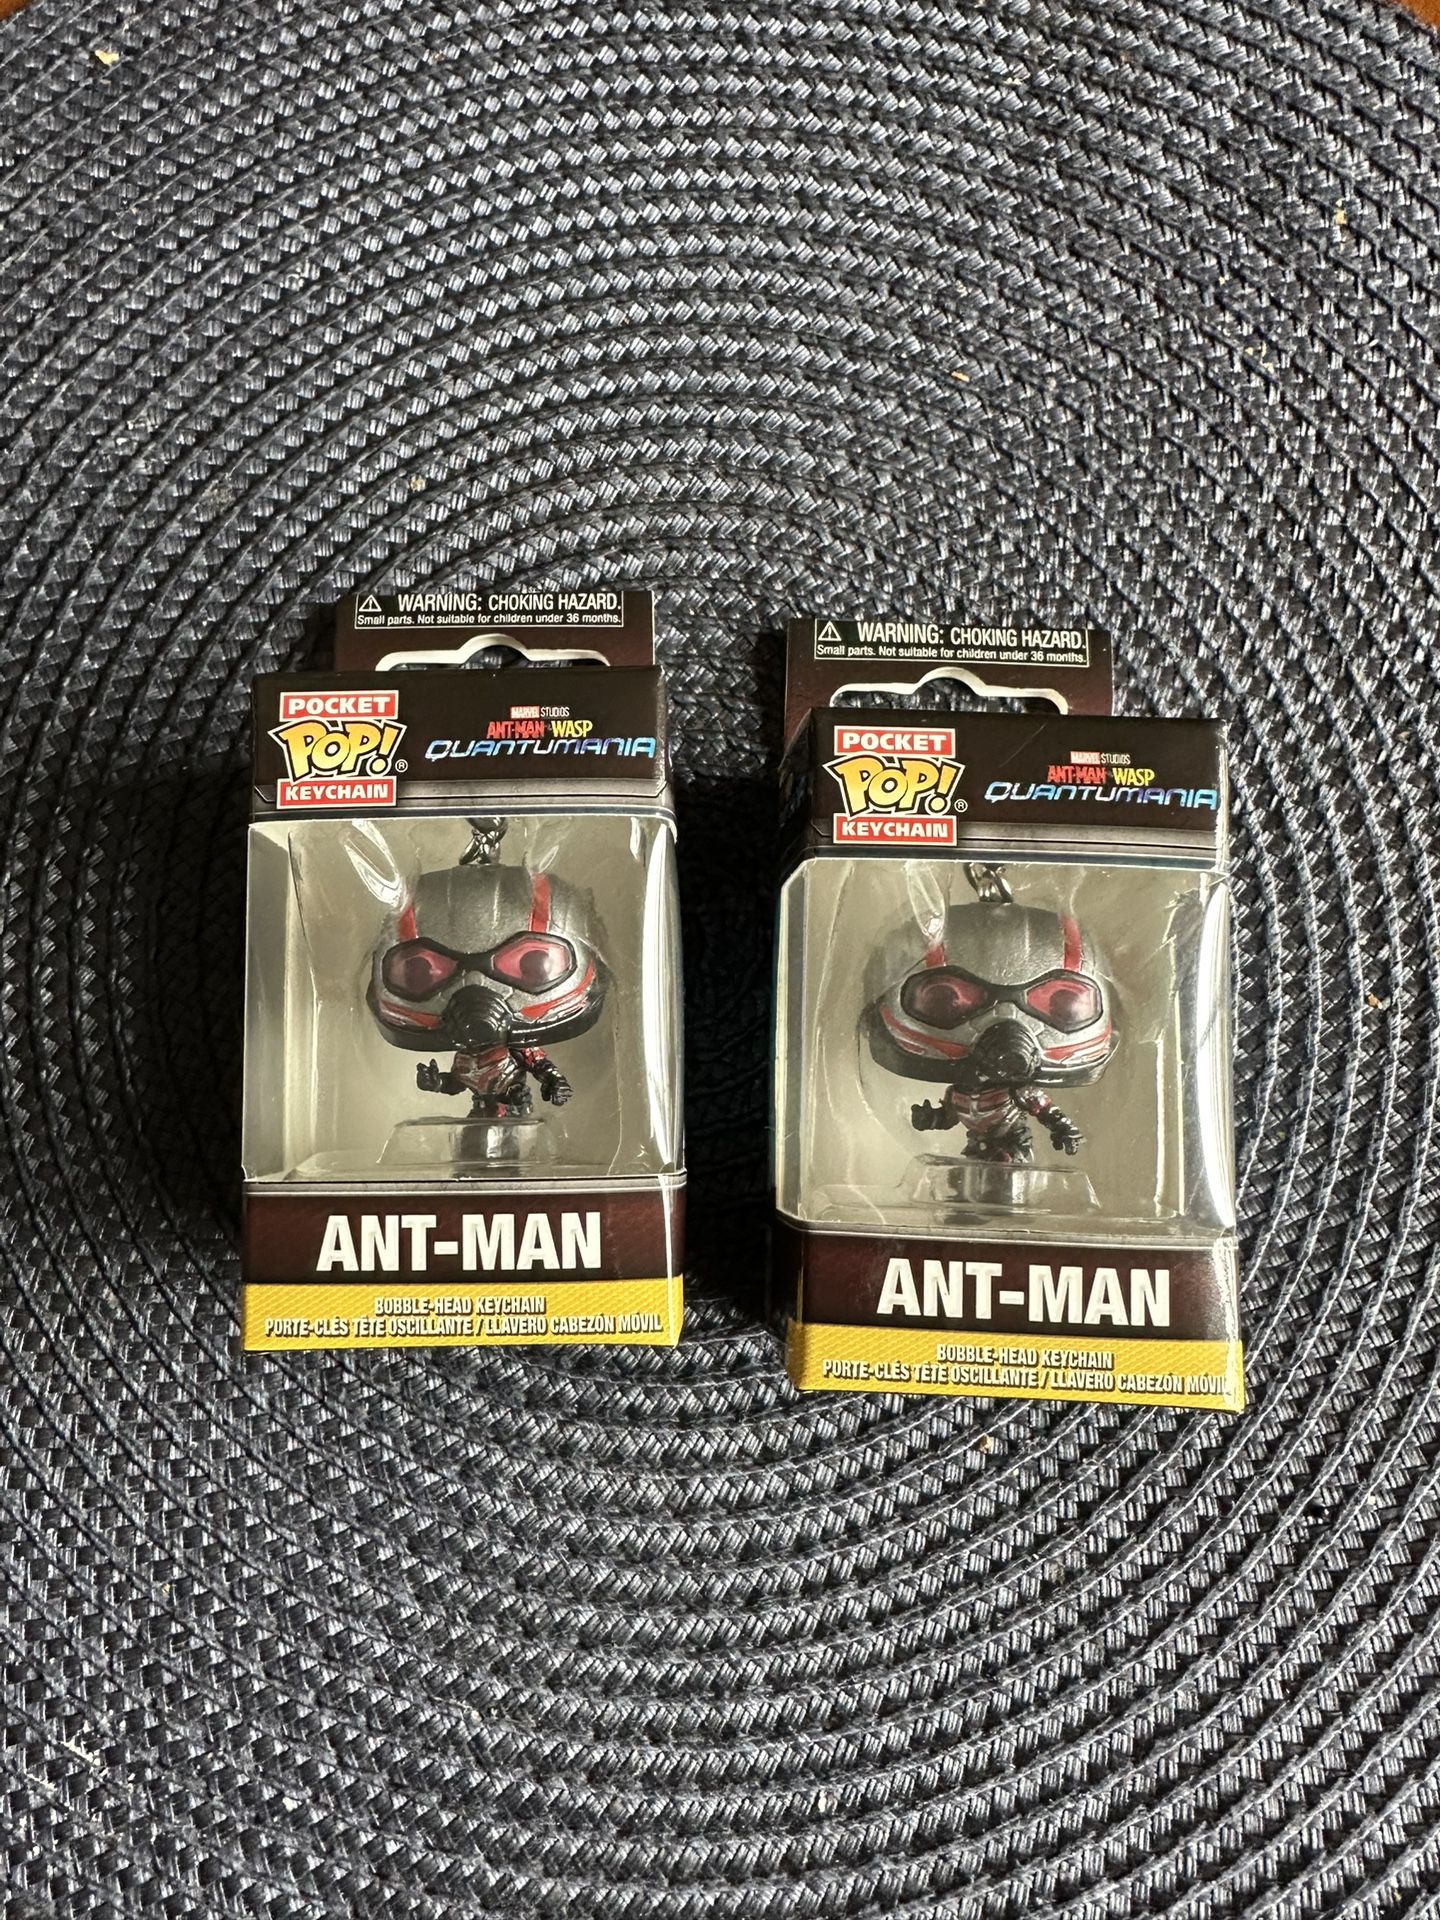 Porte Cle Pocket Pop - Ant-Man